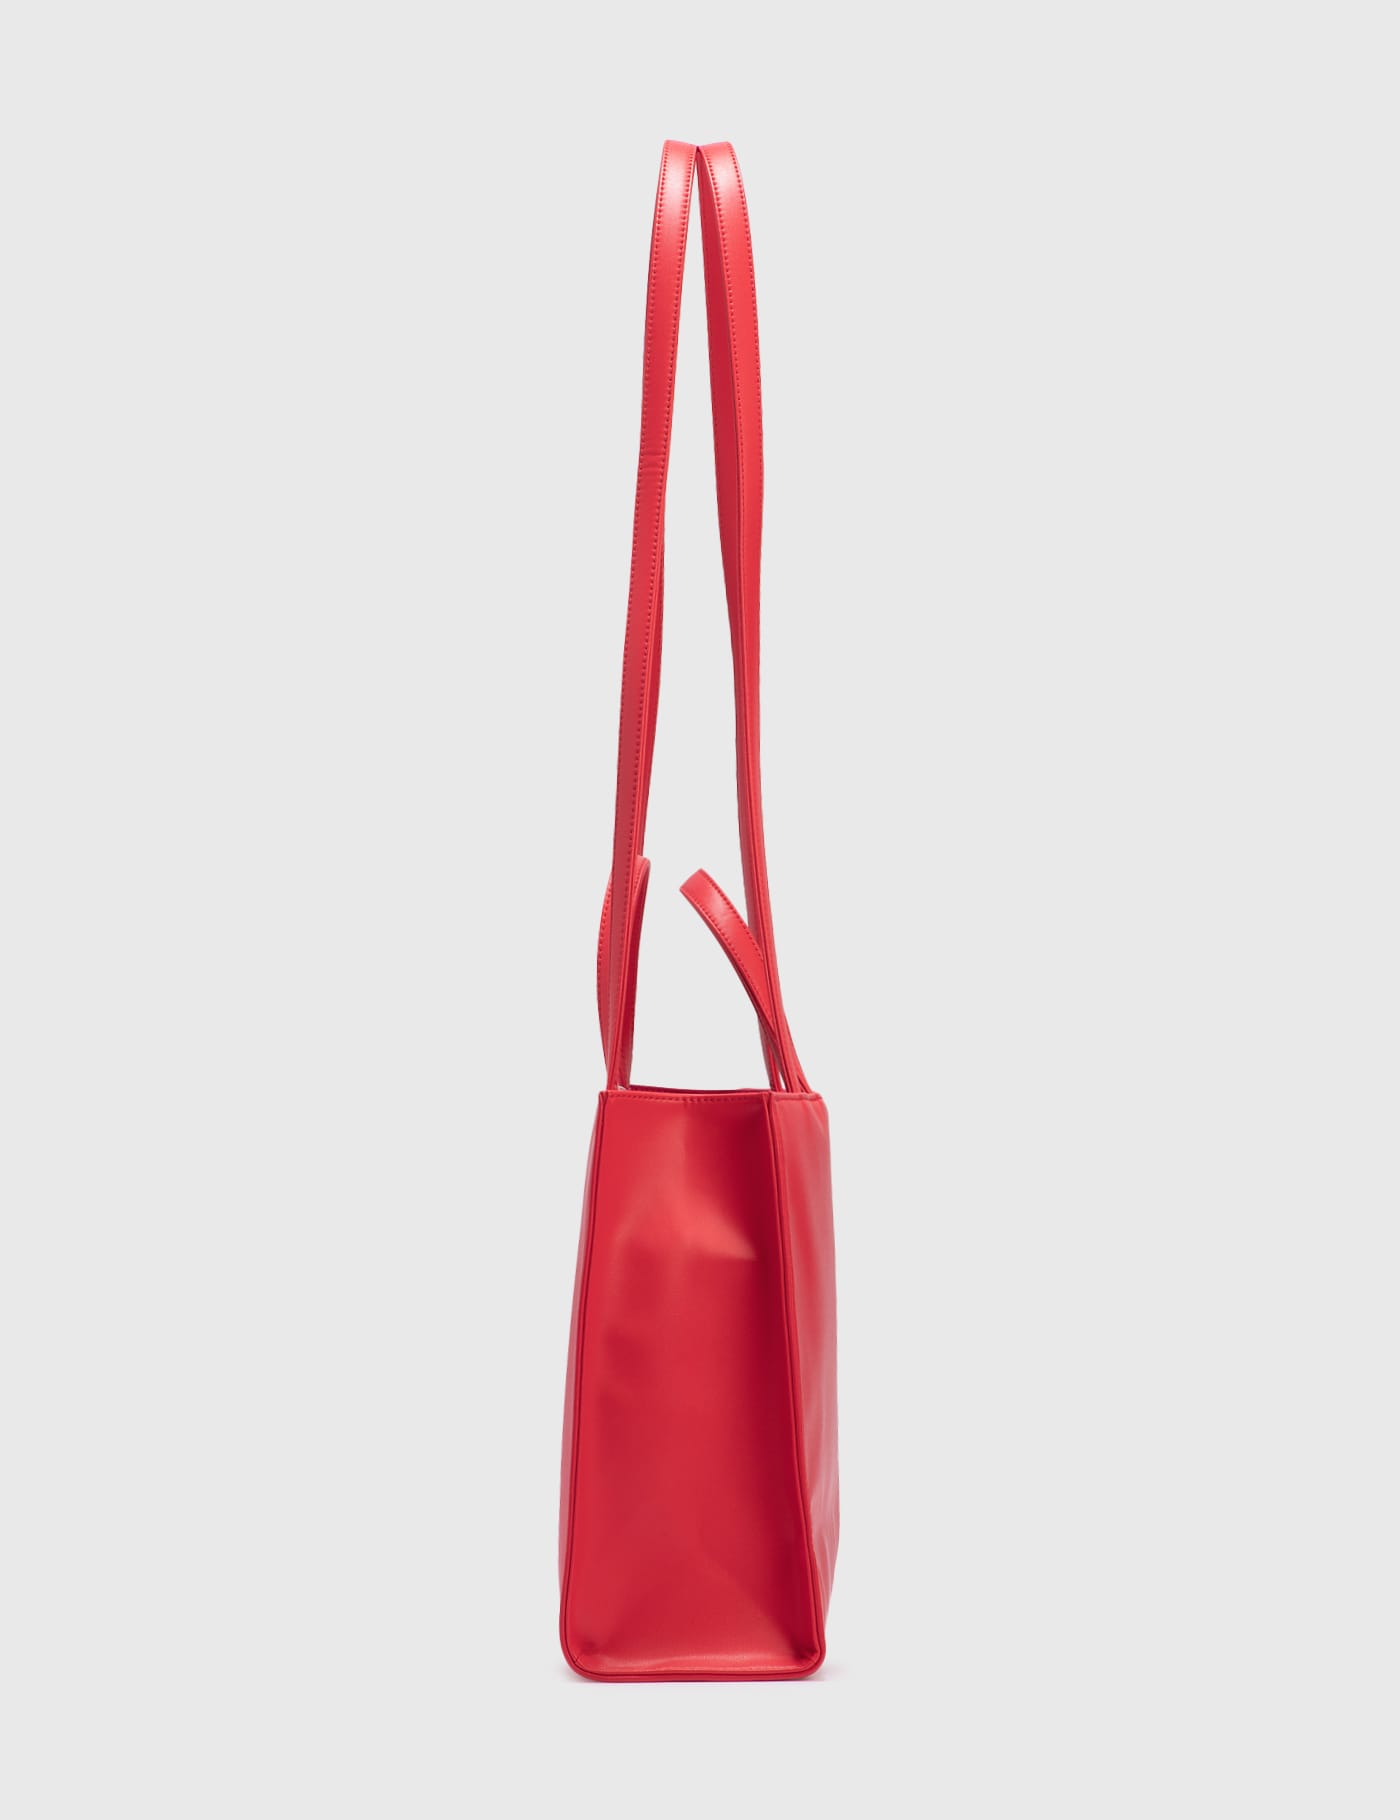 Telfar - Medium Shopping Bag | HBX - Globally Curated Fashion and Lifestyle  by Hypebeast